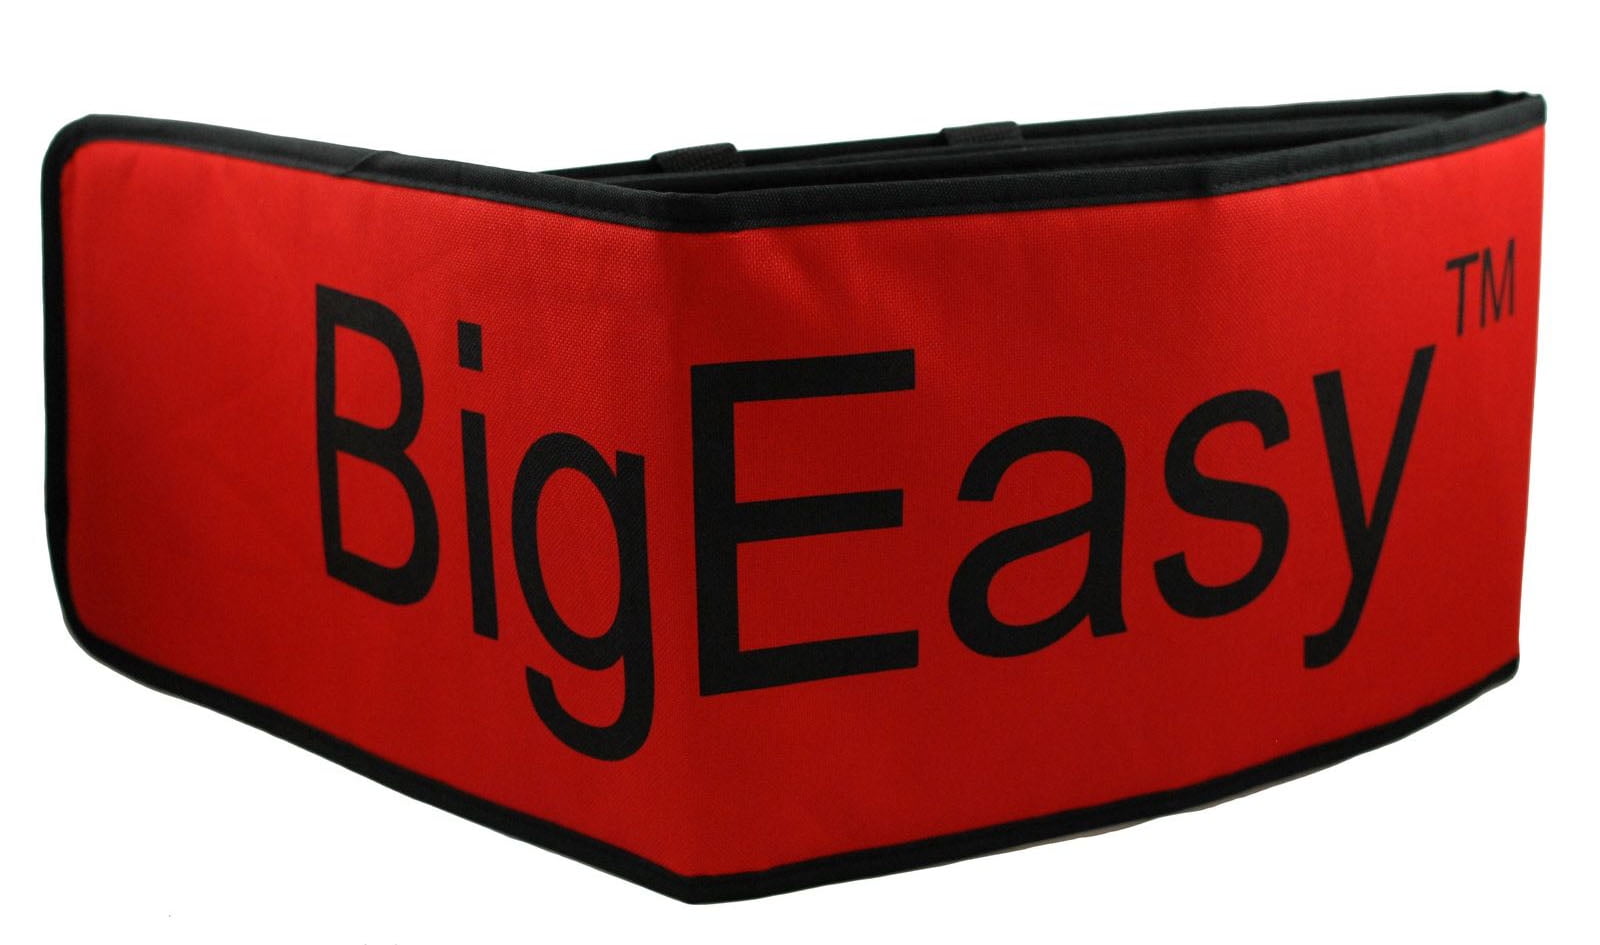 Steck 32935 BigEasy Carrying Case "Big Easy Glow" Storage Bag